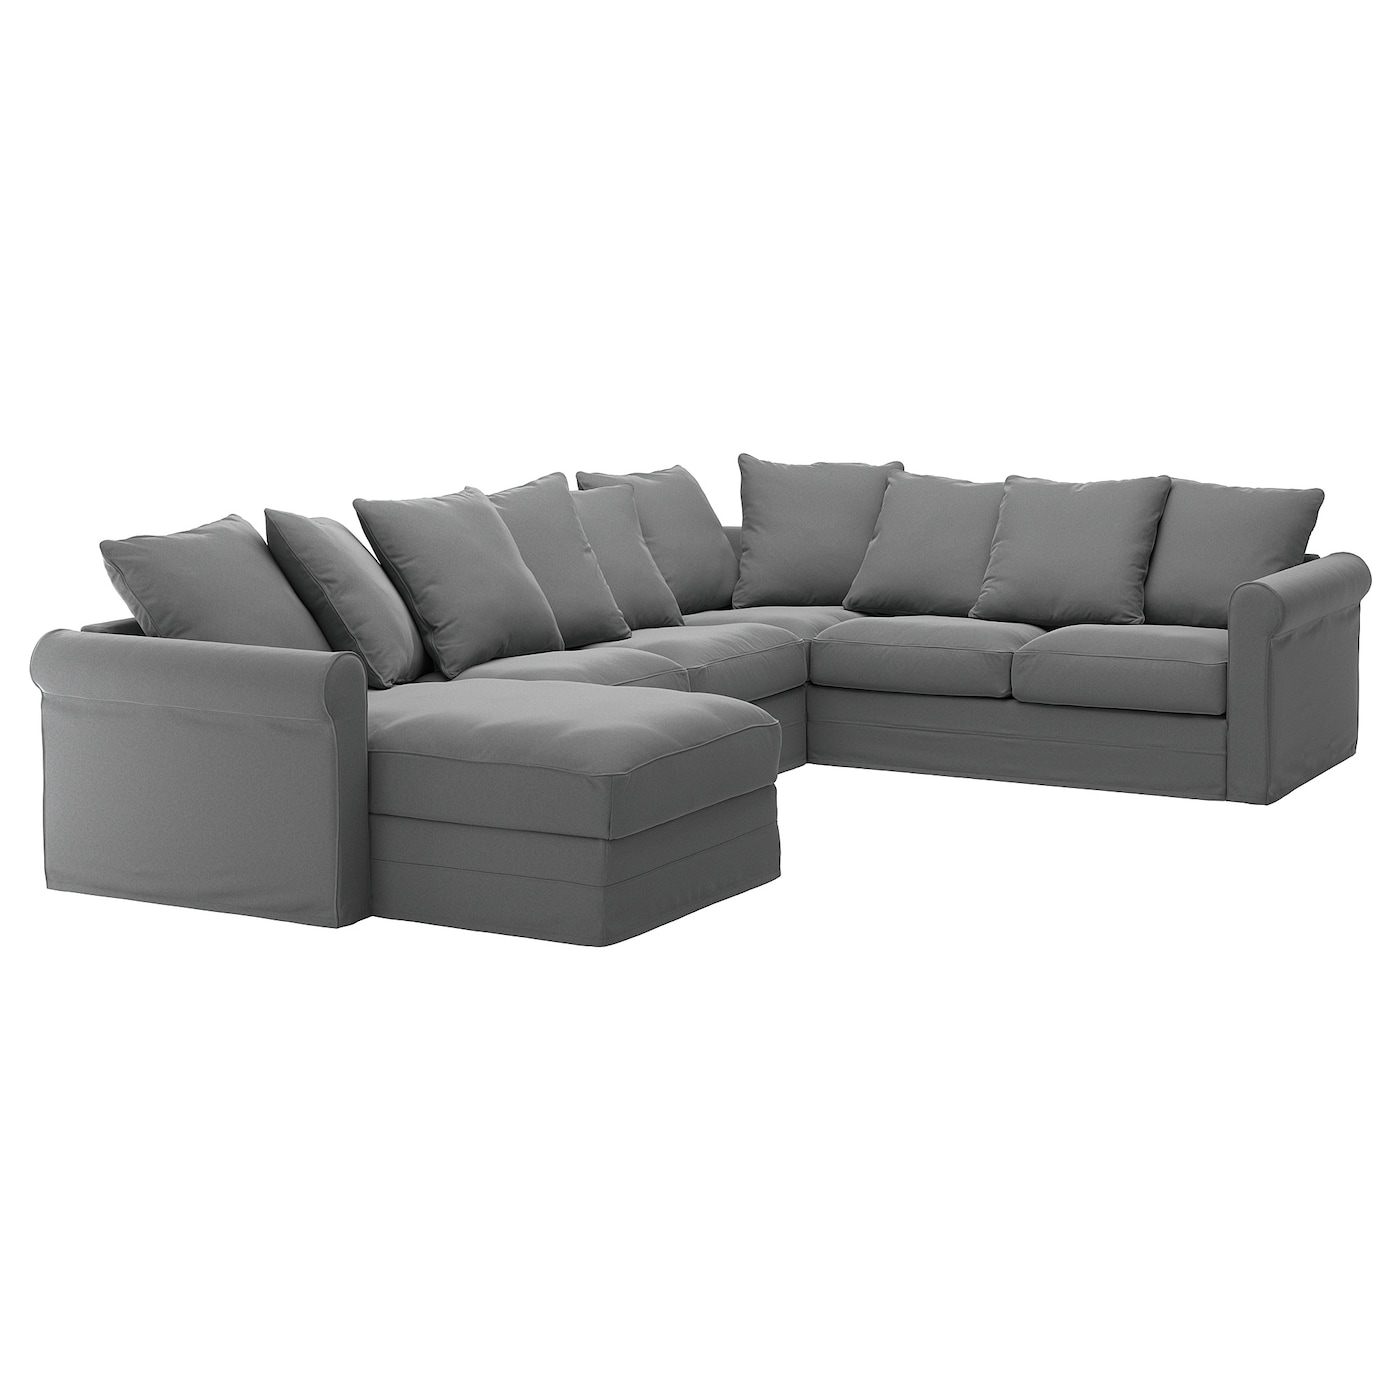 ГРЁНЛИД Диван угловой, 5-местный. диван+диван, Люнген средний серый GRÖNLID IKEA диван угловой bizzotto 0662861